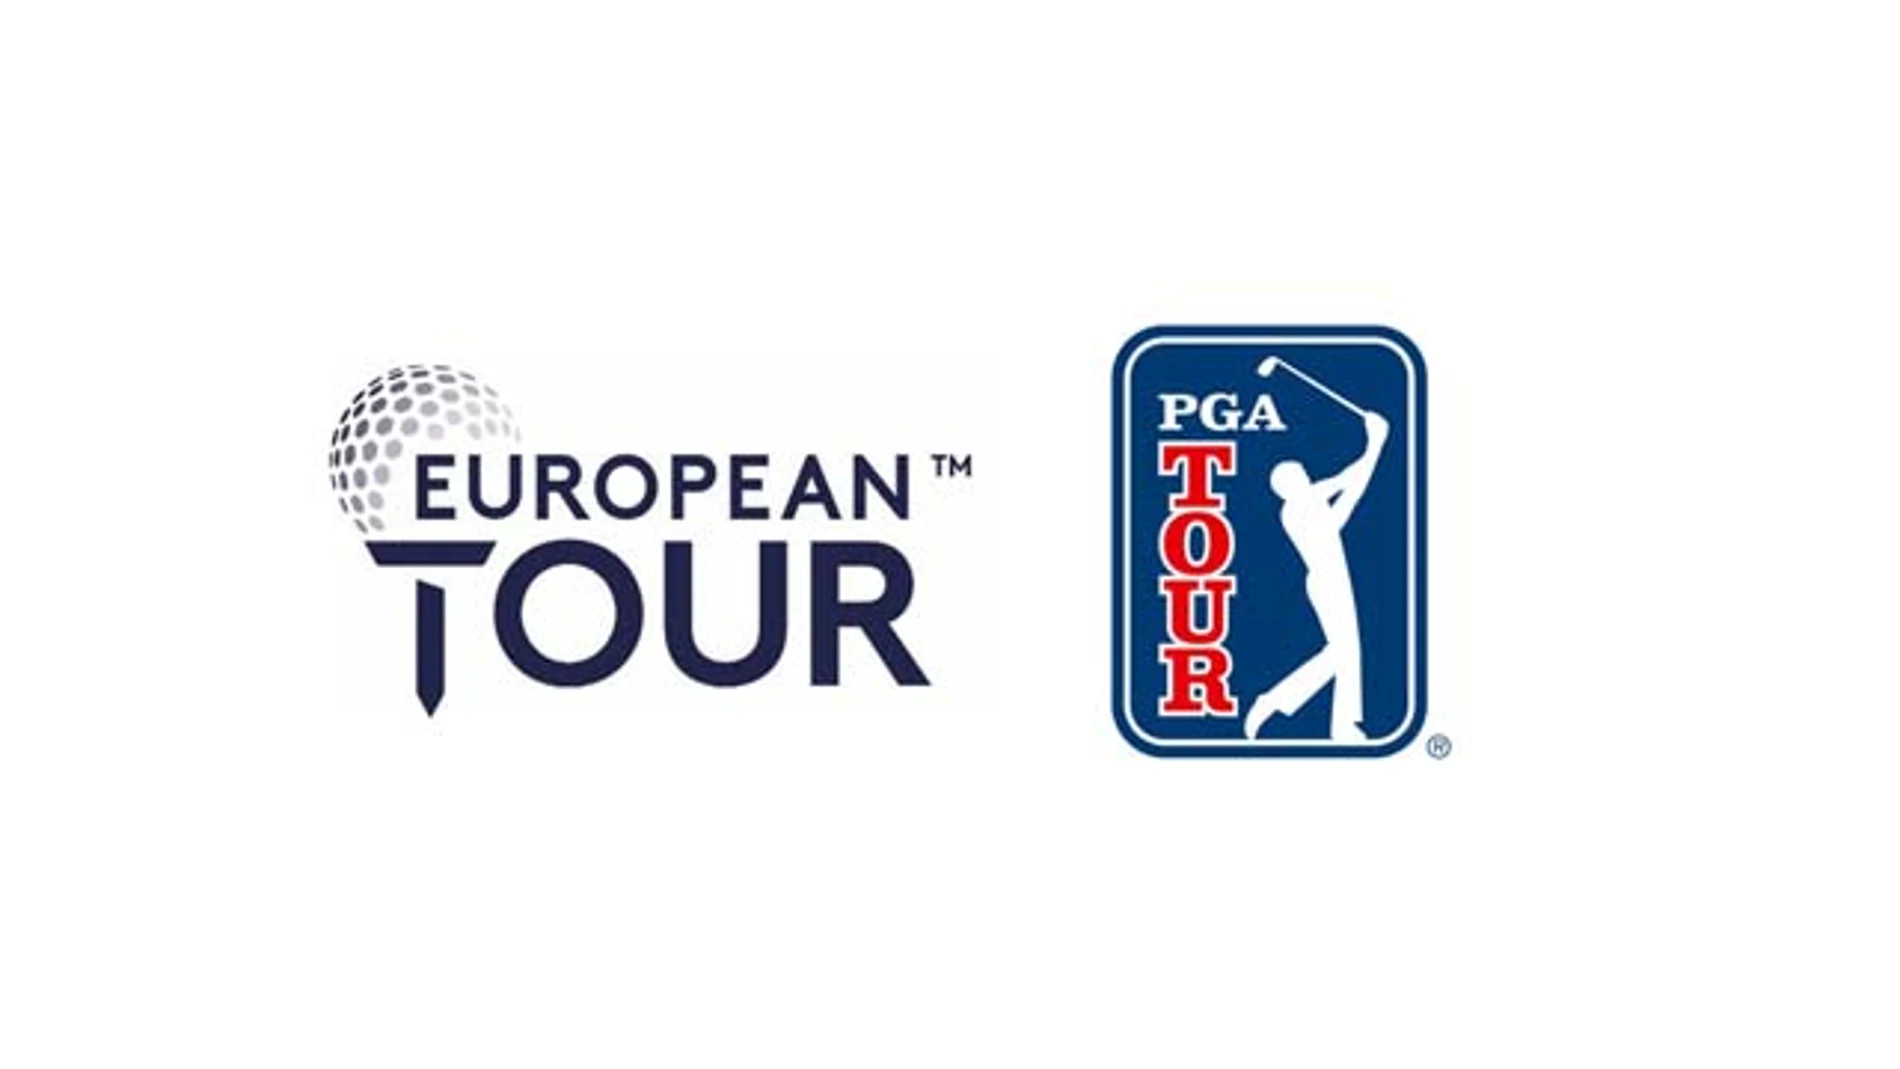 Unión European Tour y PGA Tour